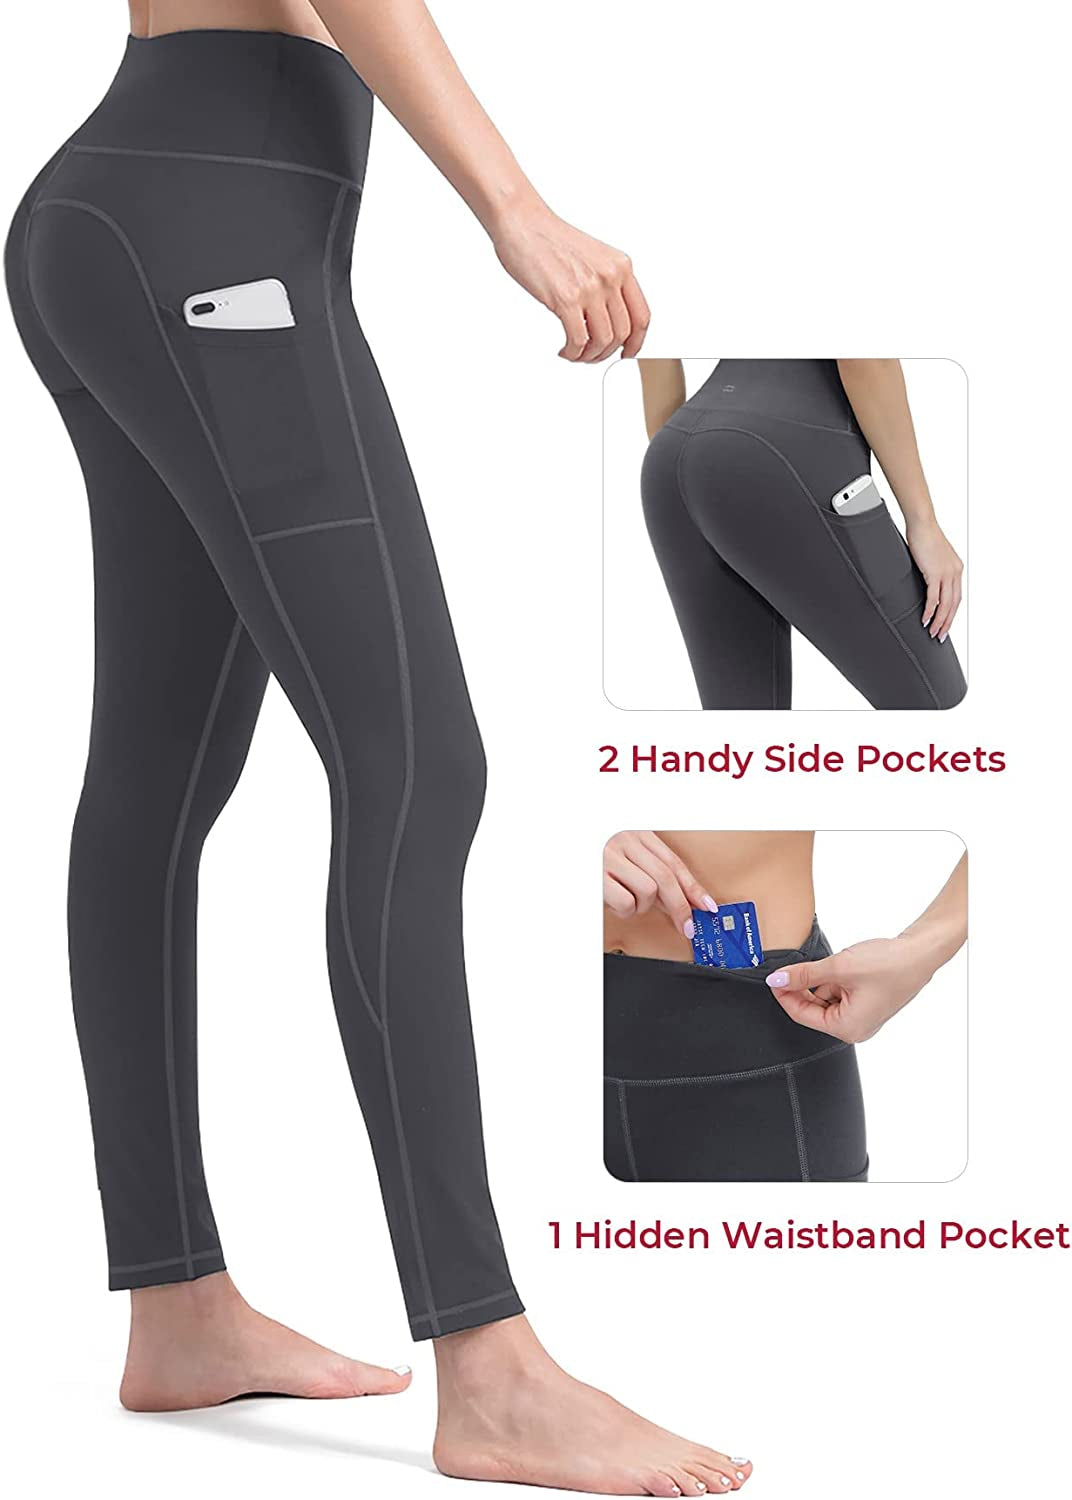 Anti-Nail Leggings for Women, Non-See-Through Yoga Pants with Phone Pockets, Tummy Control Full-Length/Capri Tights